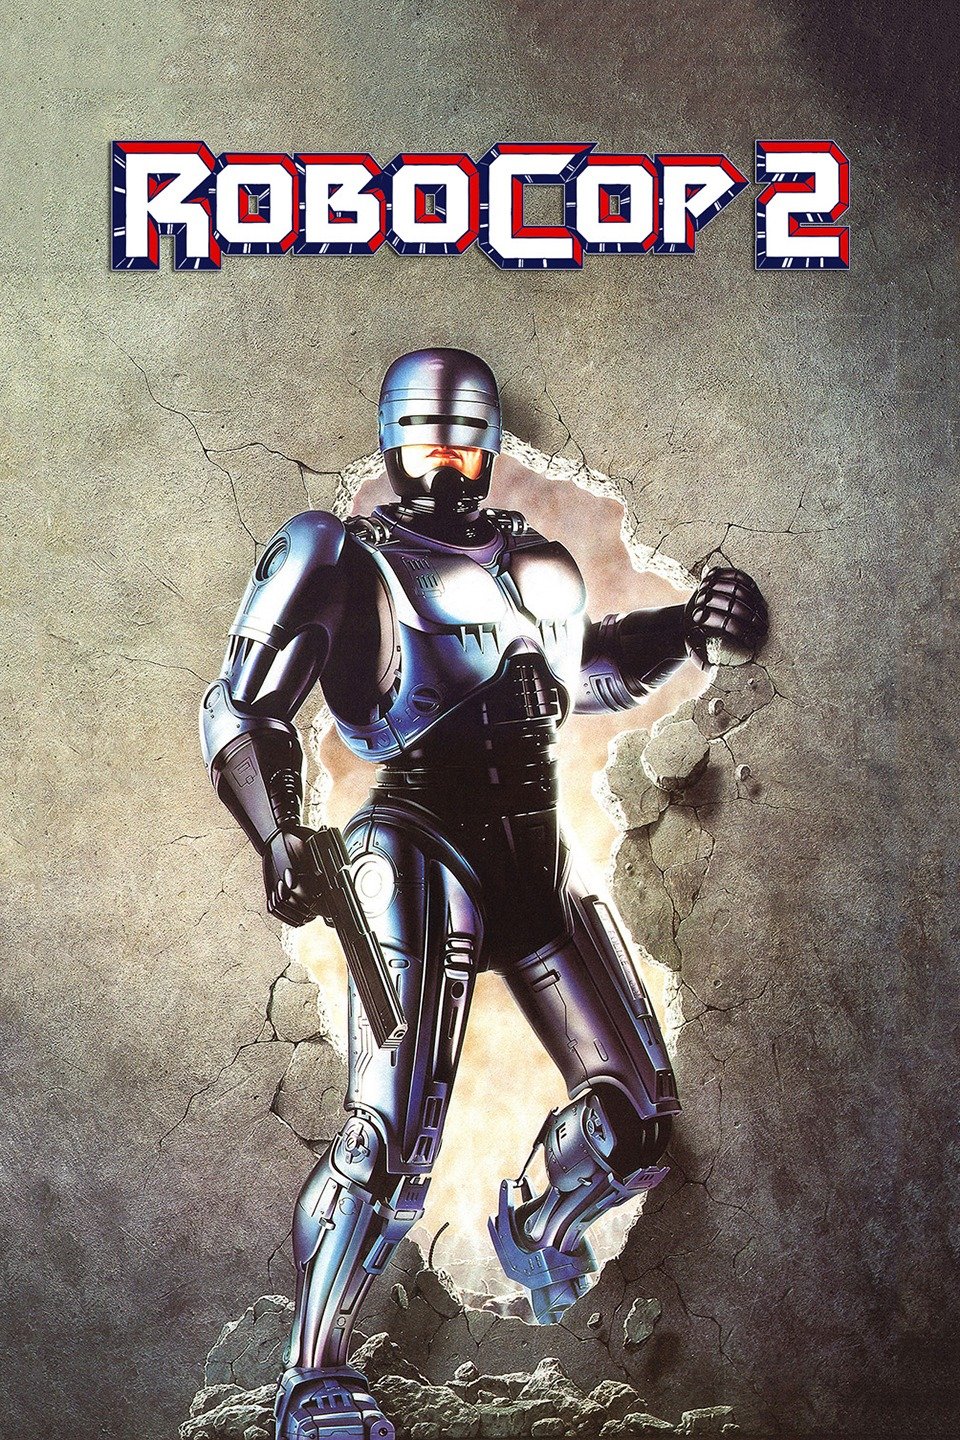 [MINI Super-HQ] RoboCop 2 (1990) โรโบคอป ภาค 2 [1080p] [พากย์ไทย 2.0 + เสียงอังกฤษ 5.1] [บรรยายไทย + อังกฤษ] [เสียงไทย + ซับไทย]